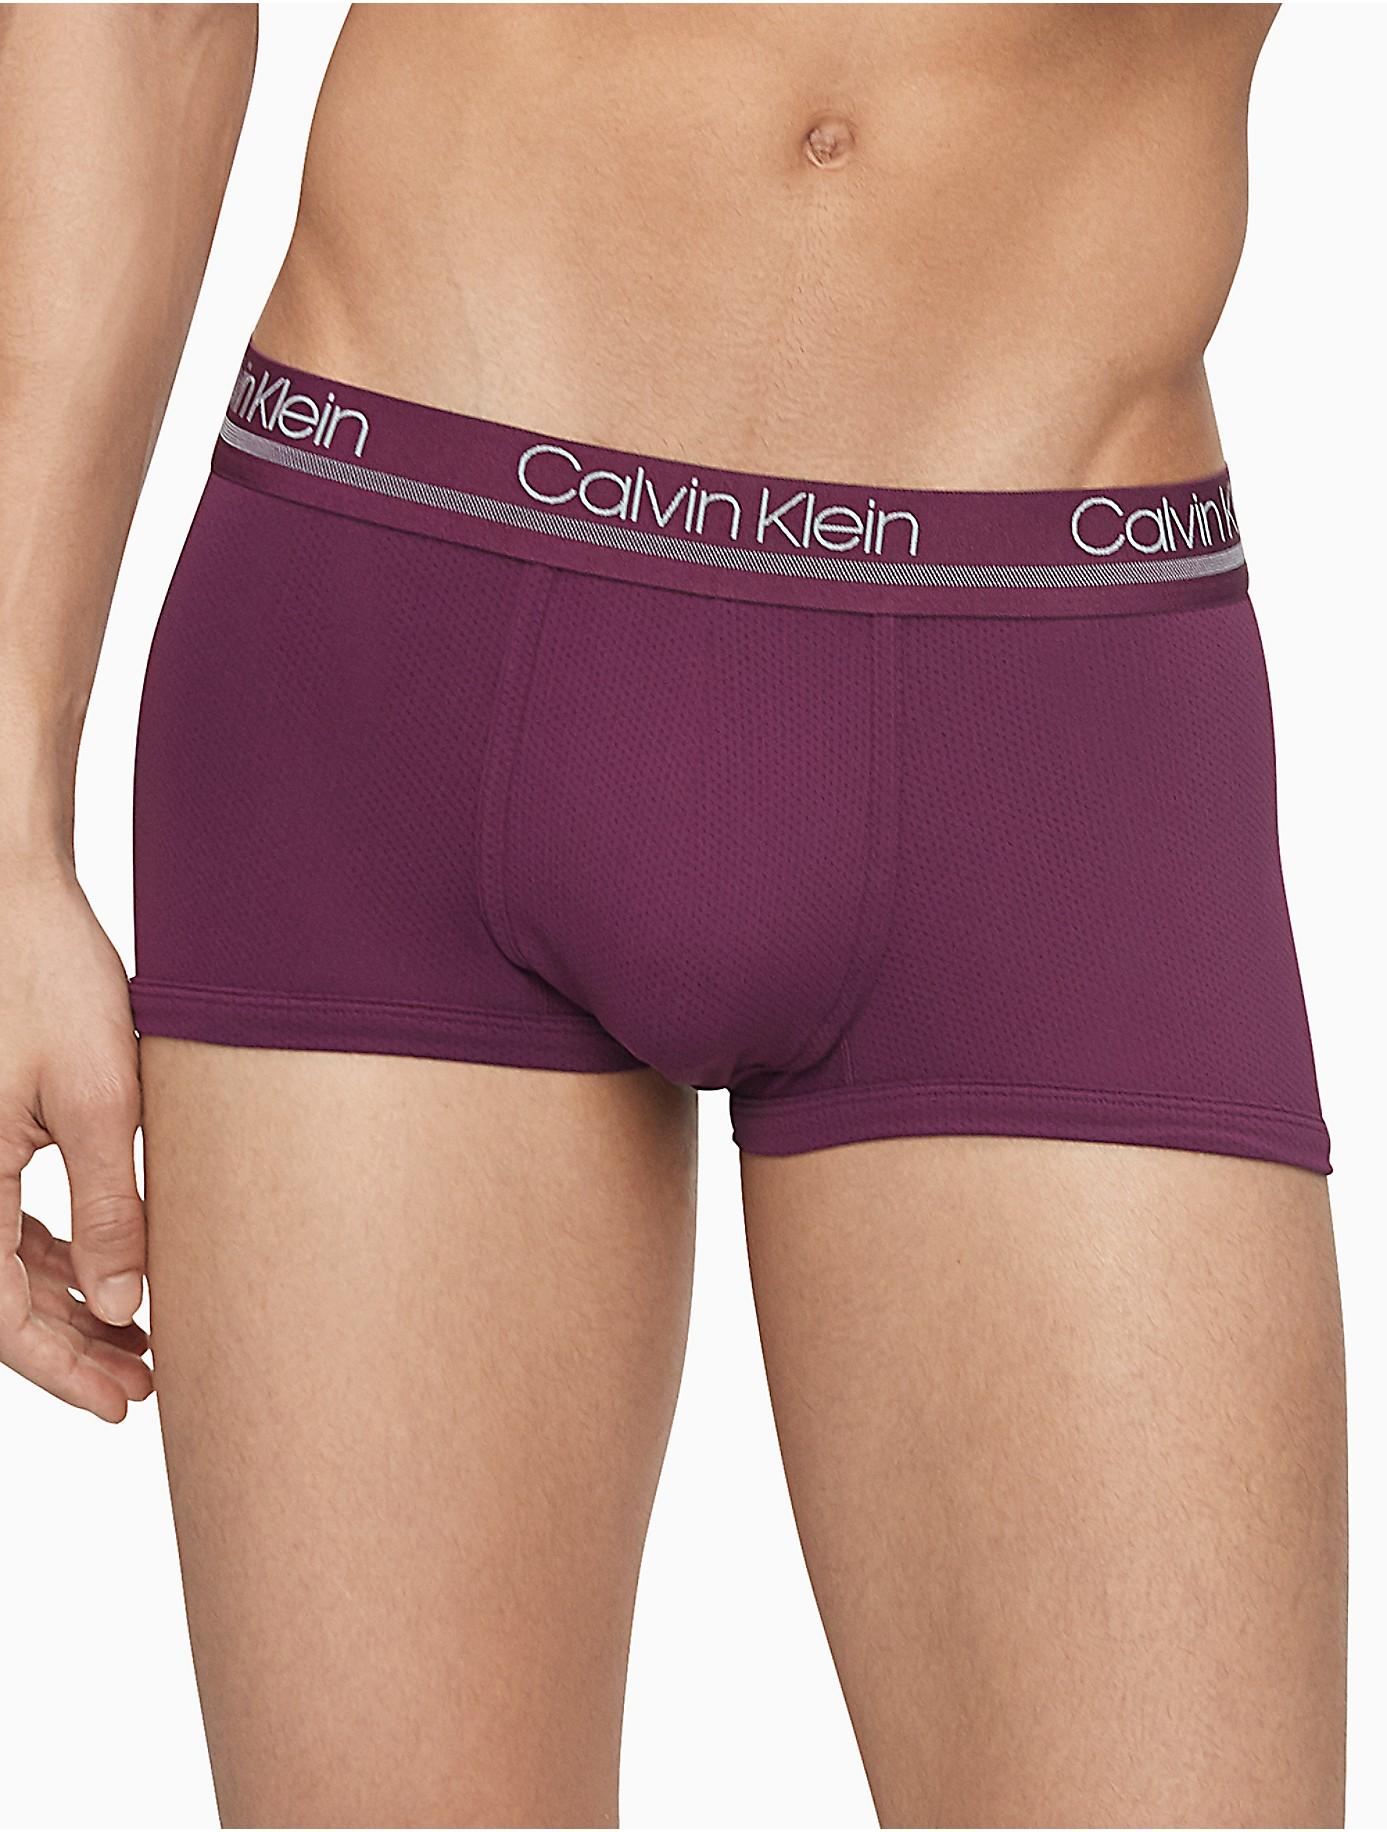 Calvin Klein Ck Active Mesh Micro Trunk in Purple for Men